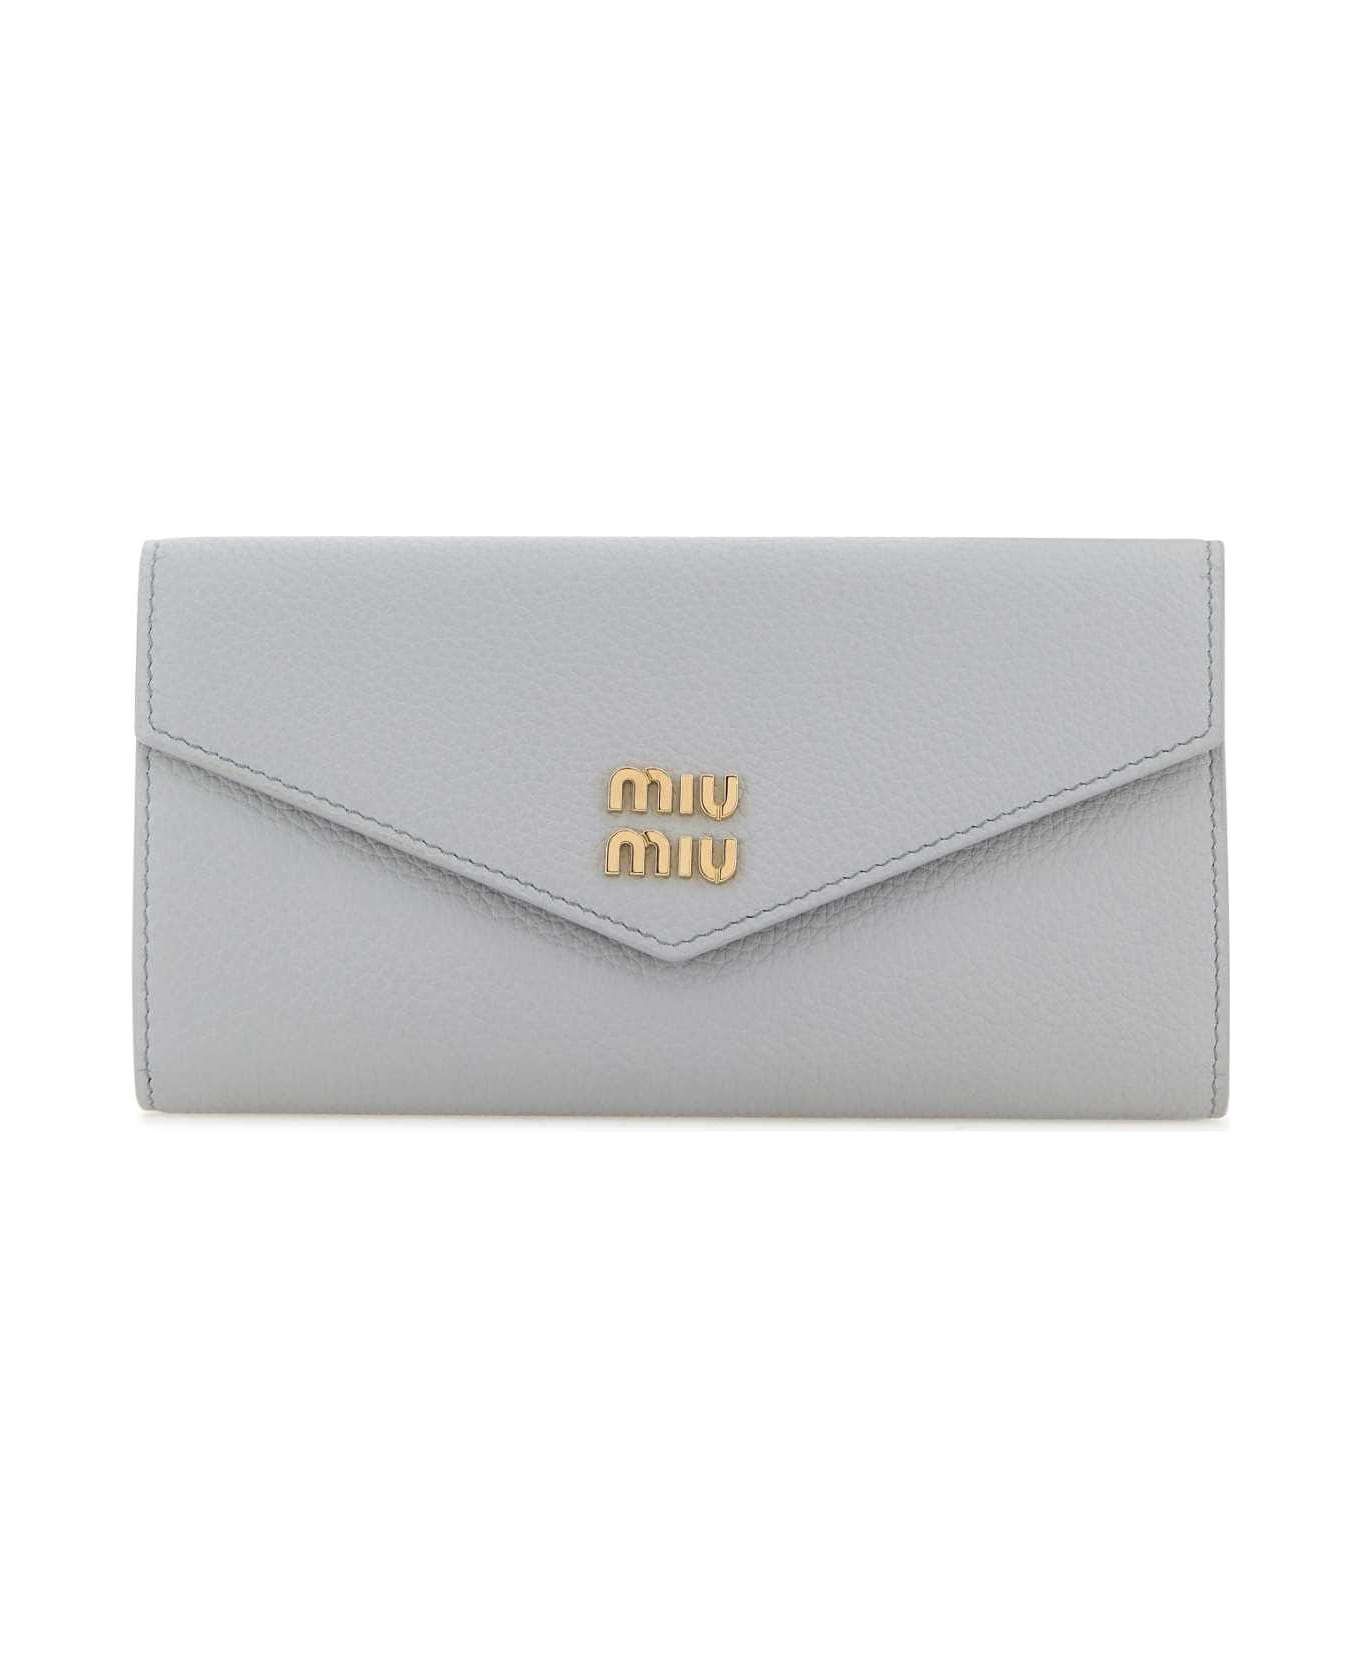 Miu Miu Powder Blue Leather Wallet - FIORDALISO 財布